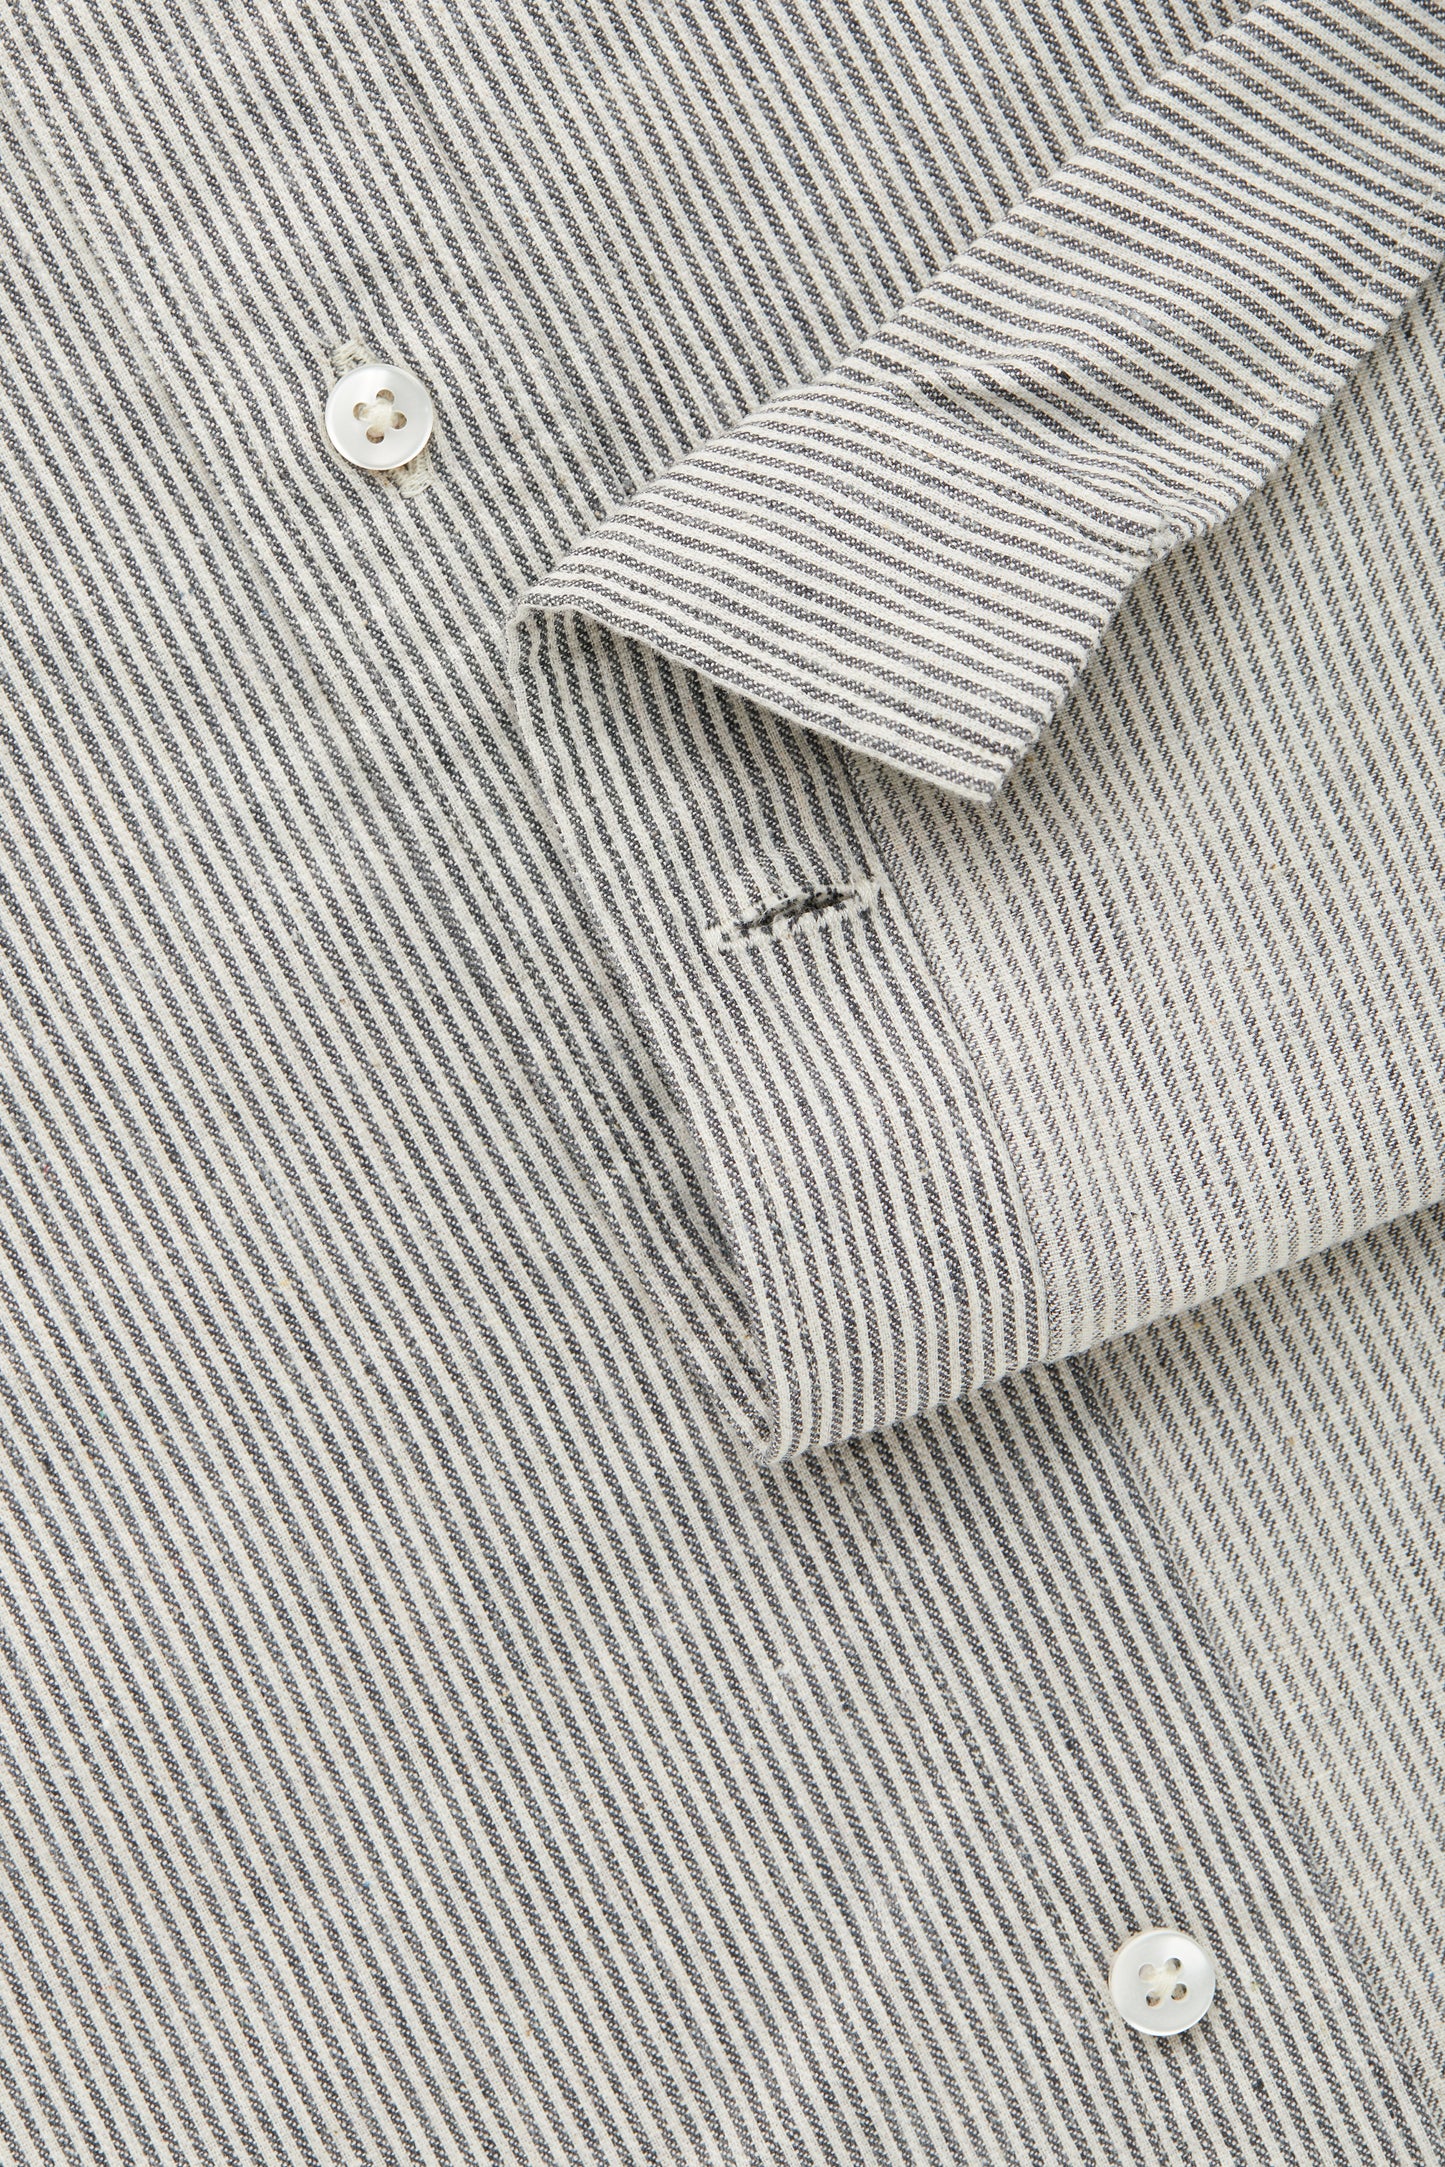 Hickory Striped Cotton Button Up Shirt Regular Fit